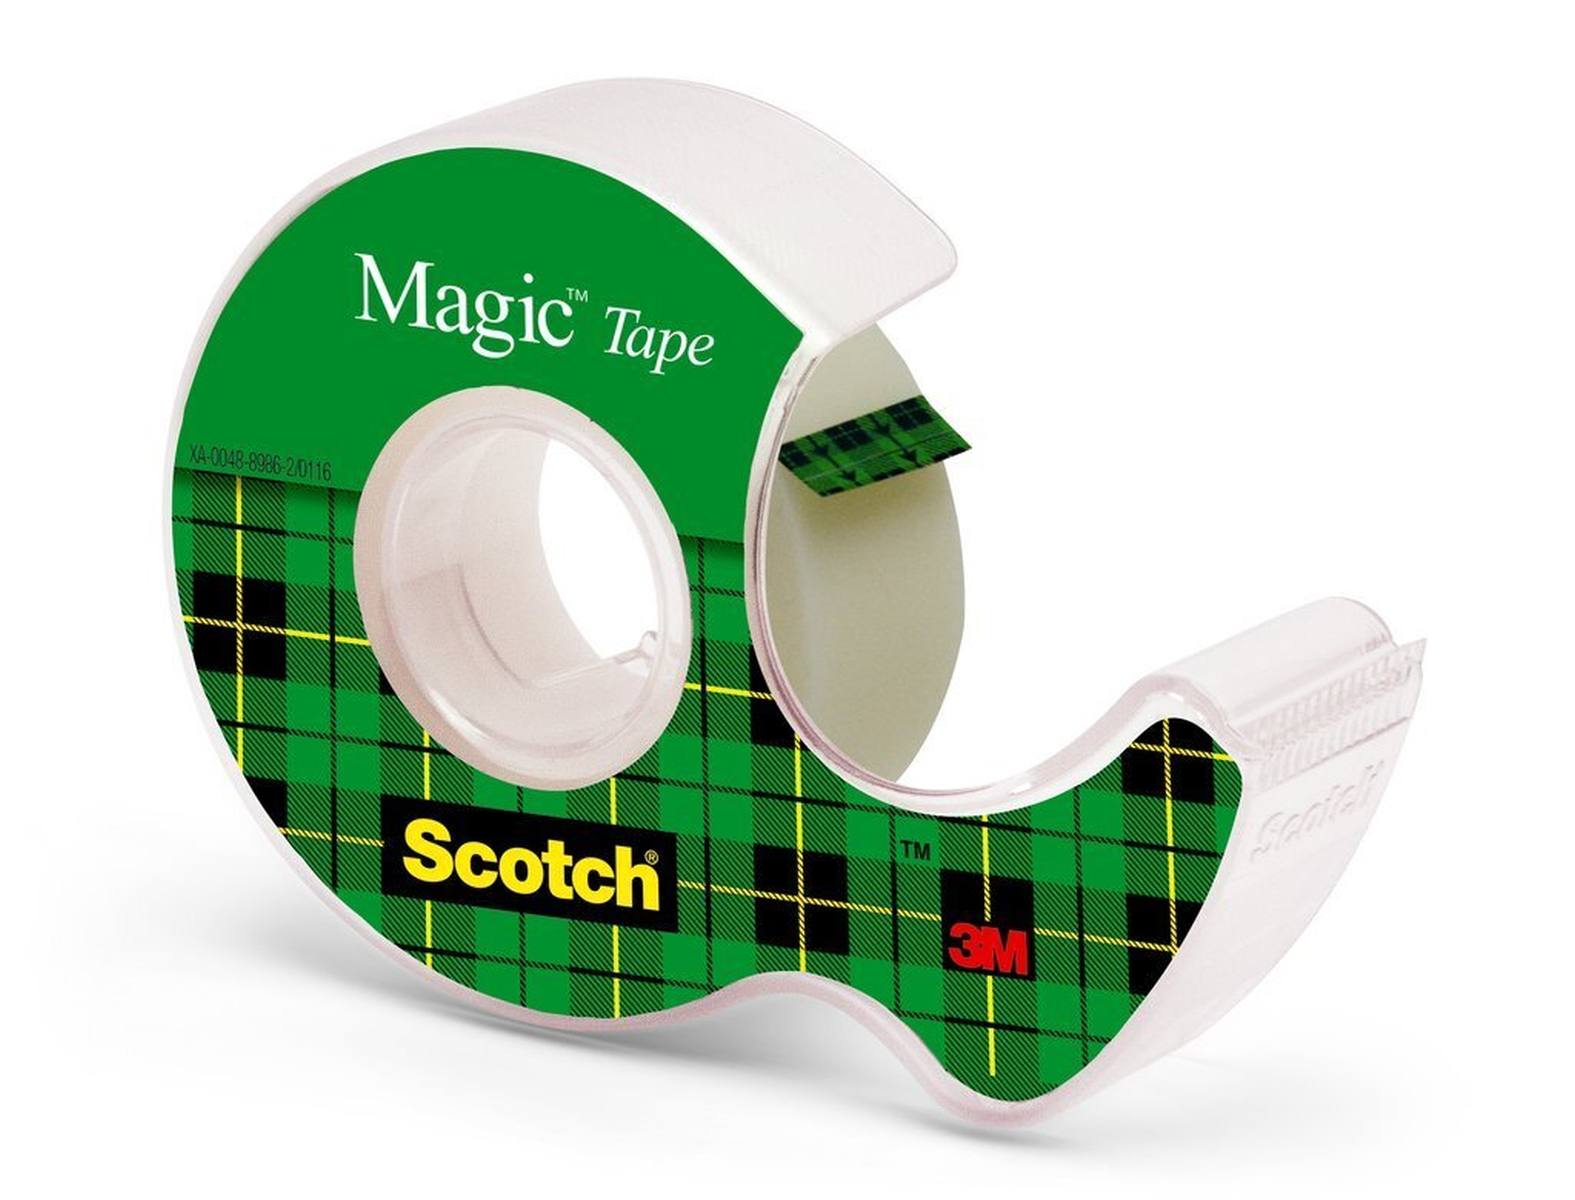 3M Scotch Magic teippi 1 rulla 19 mm x 7,5 m 1 käsin annostelulaite